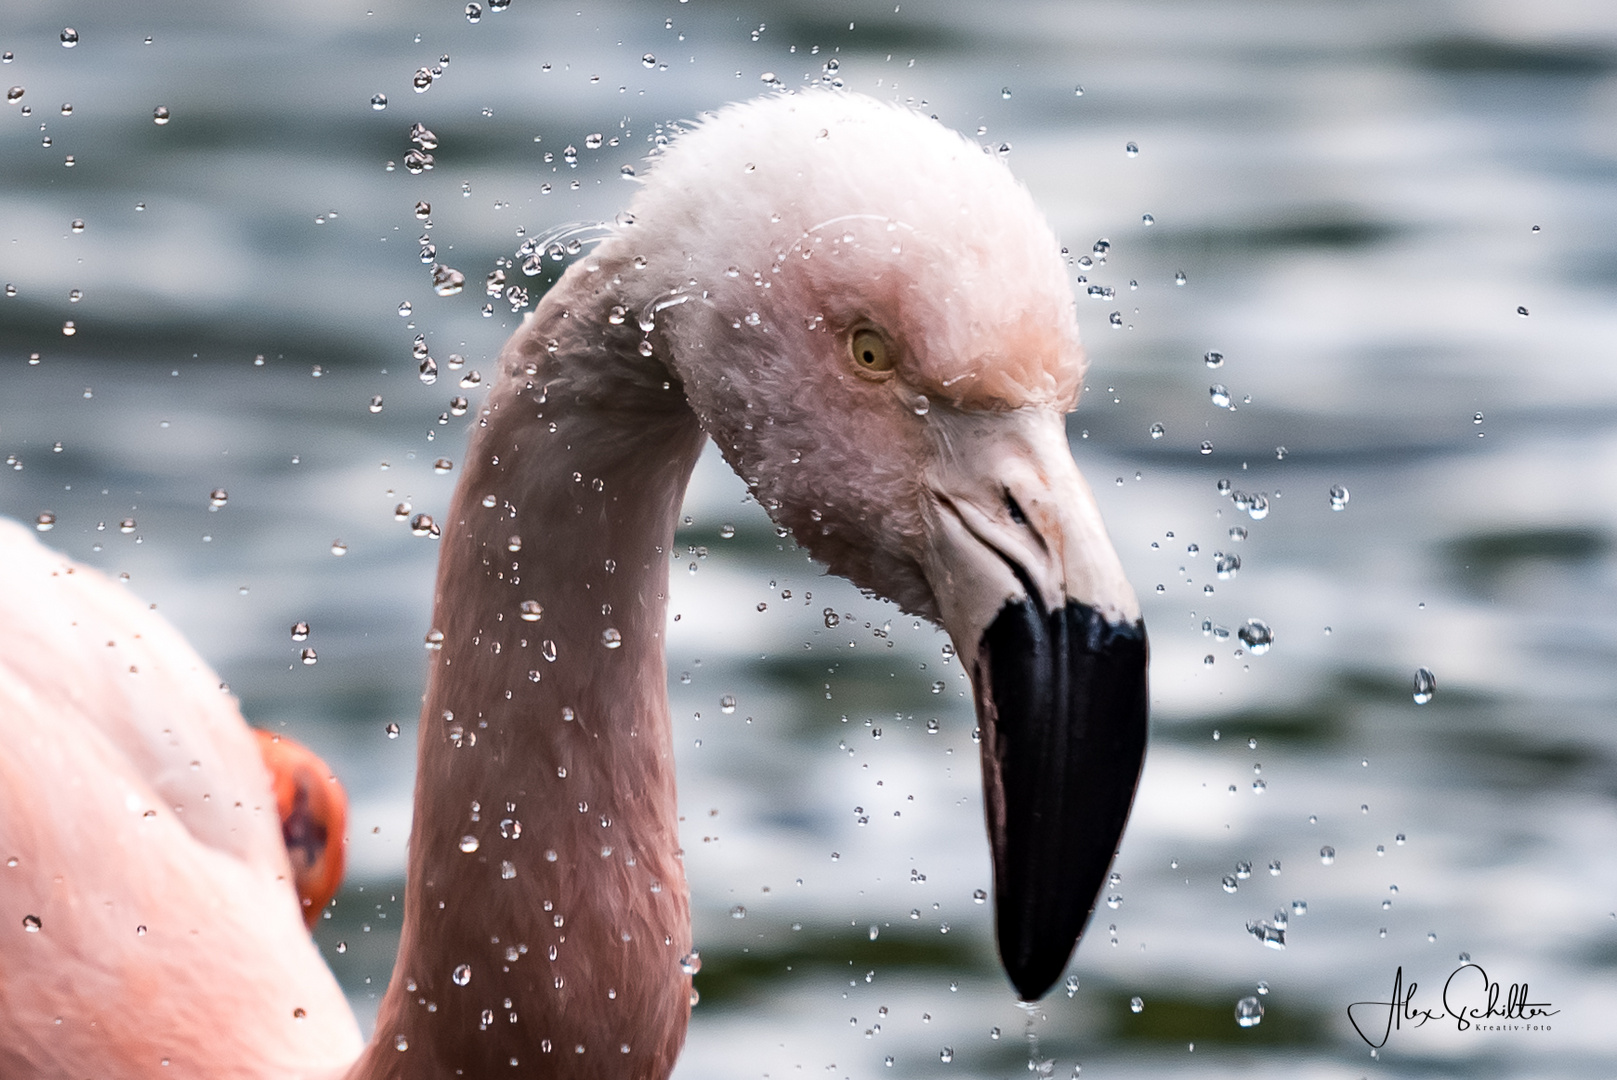 "...kopfschüttelnder Flamingo..."